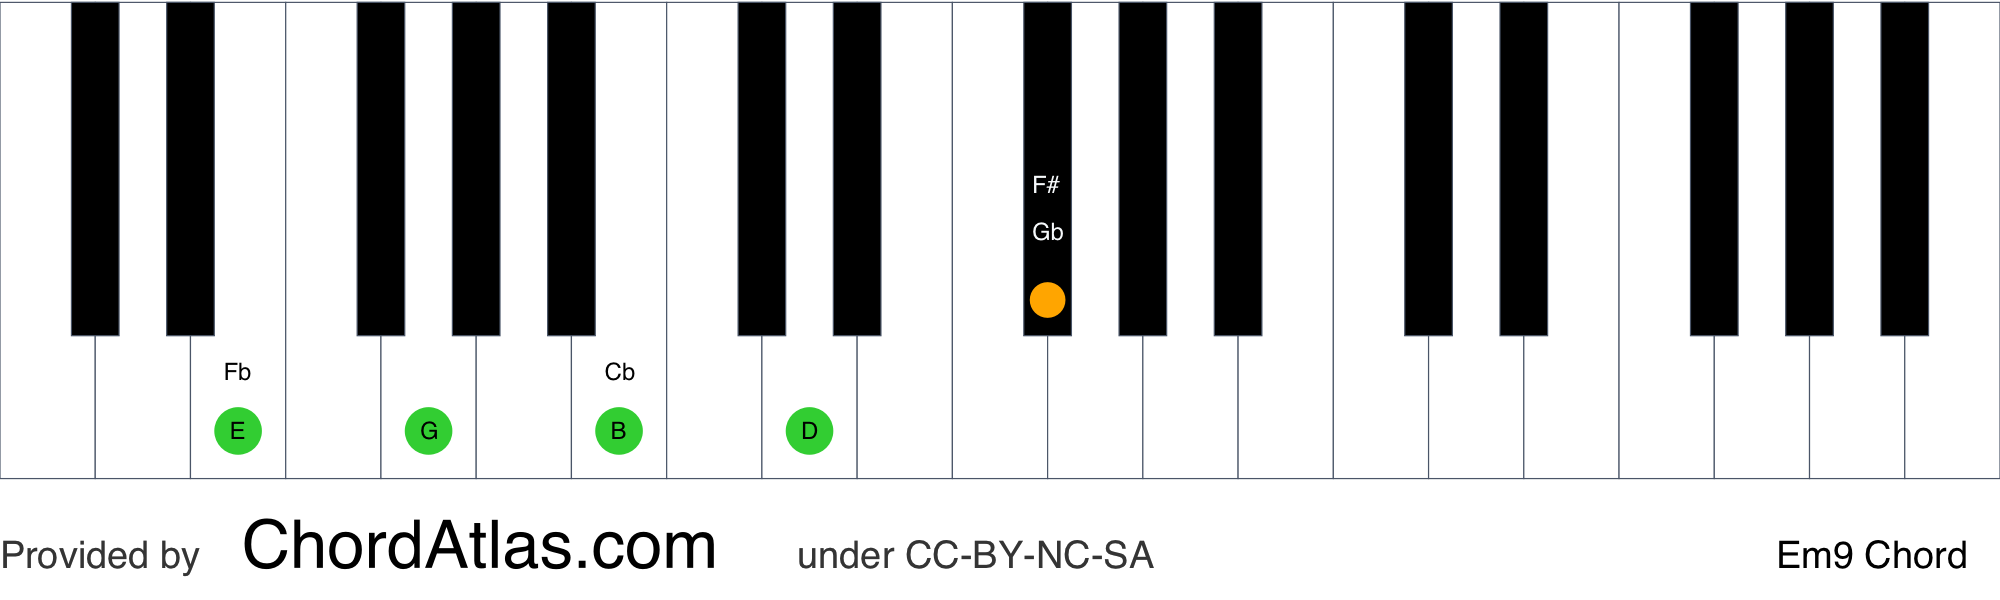 Traición carrete rodear E minor ninth piano chord - Em9 | ChordAtlas